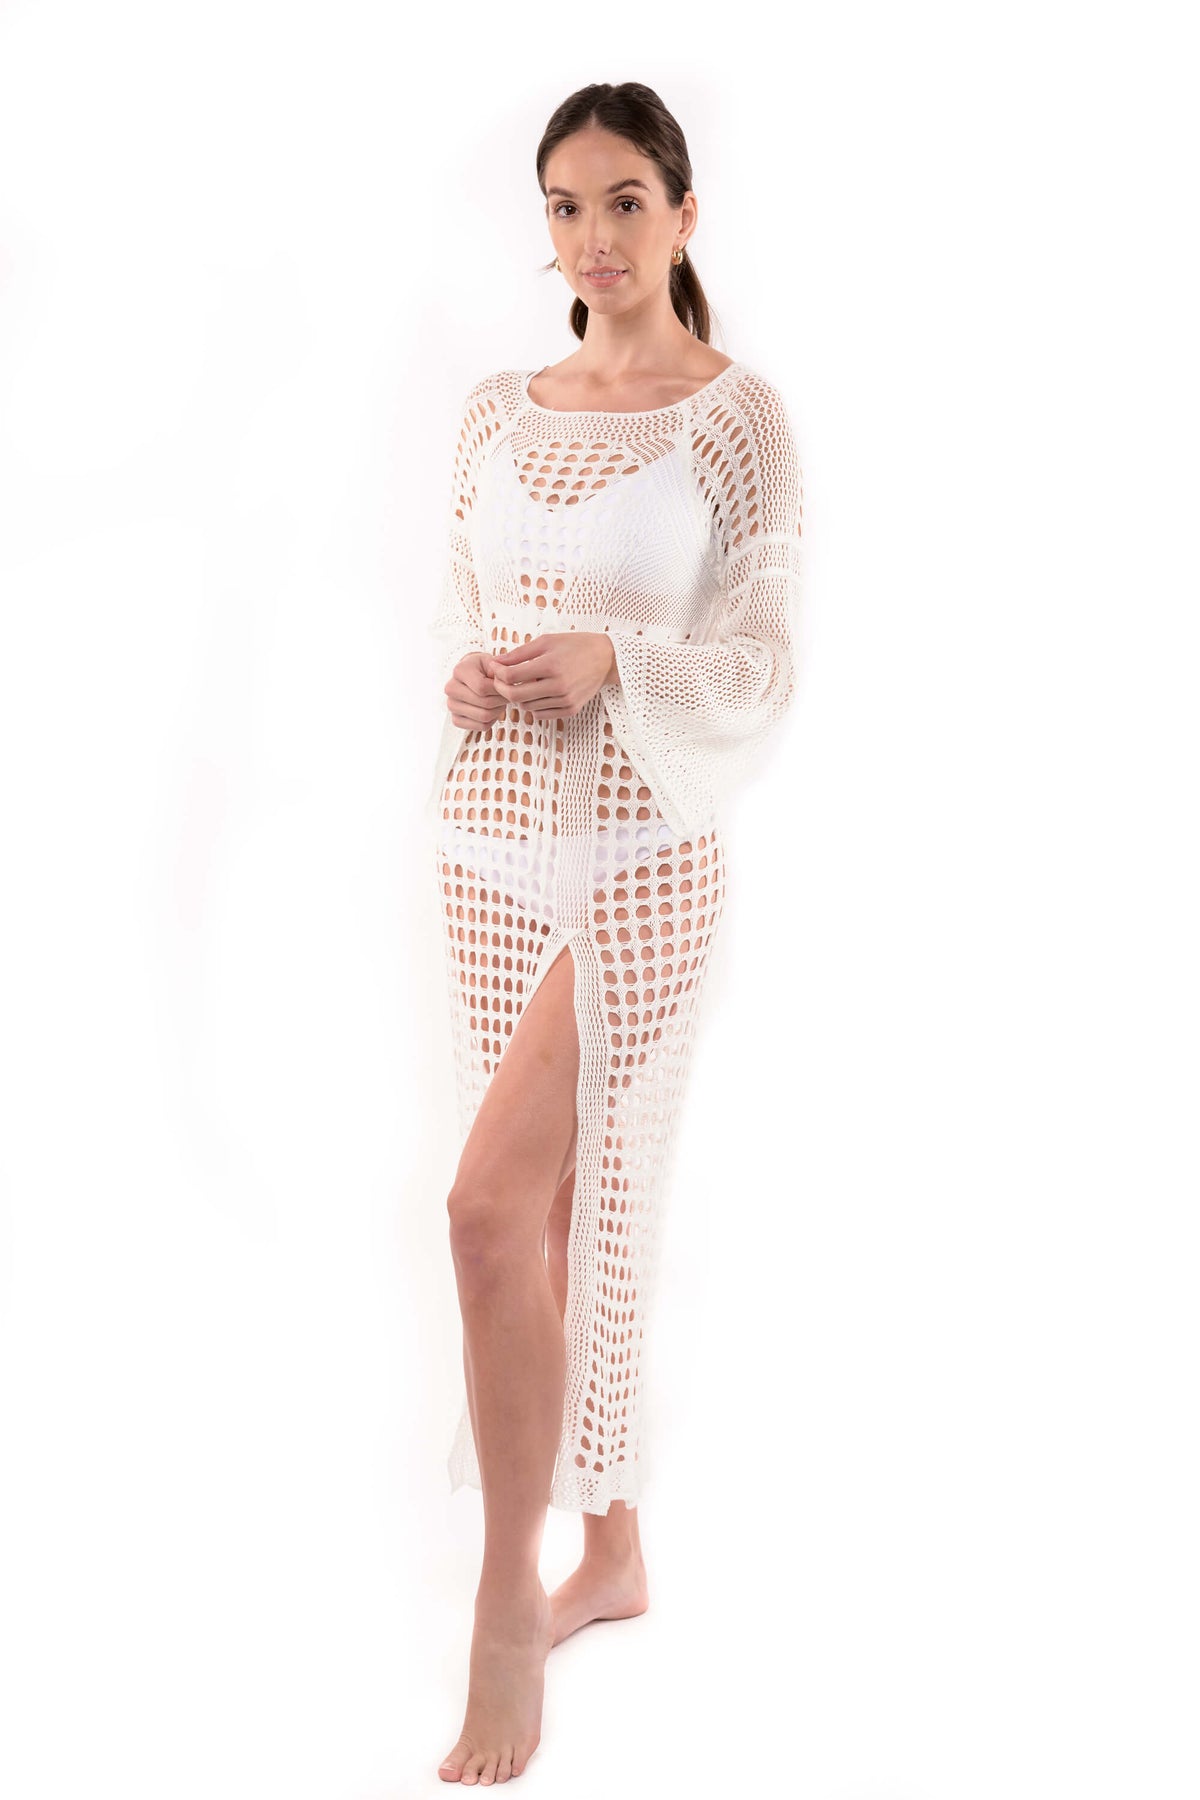 Studio photo of model wearing the Stella white crochet cover up